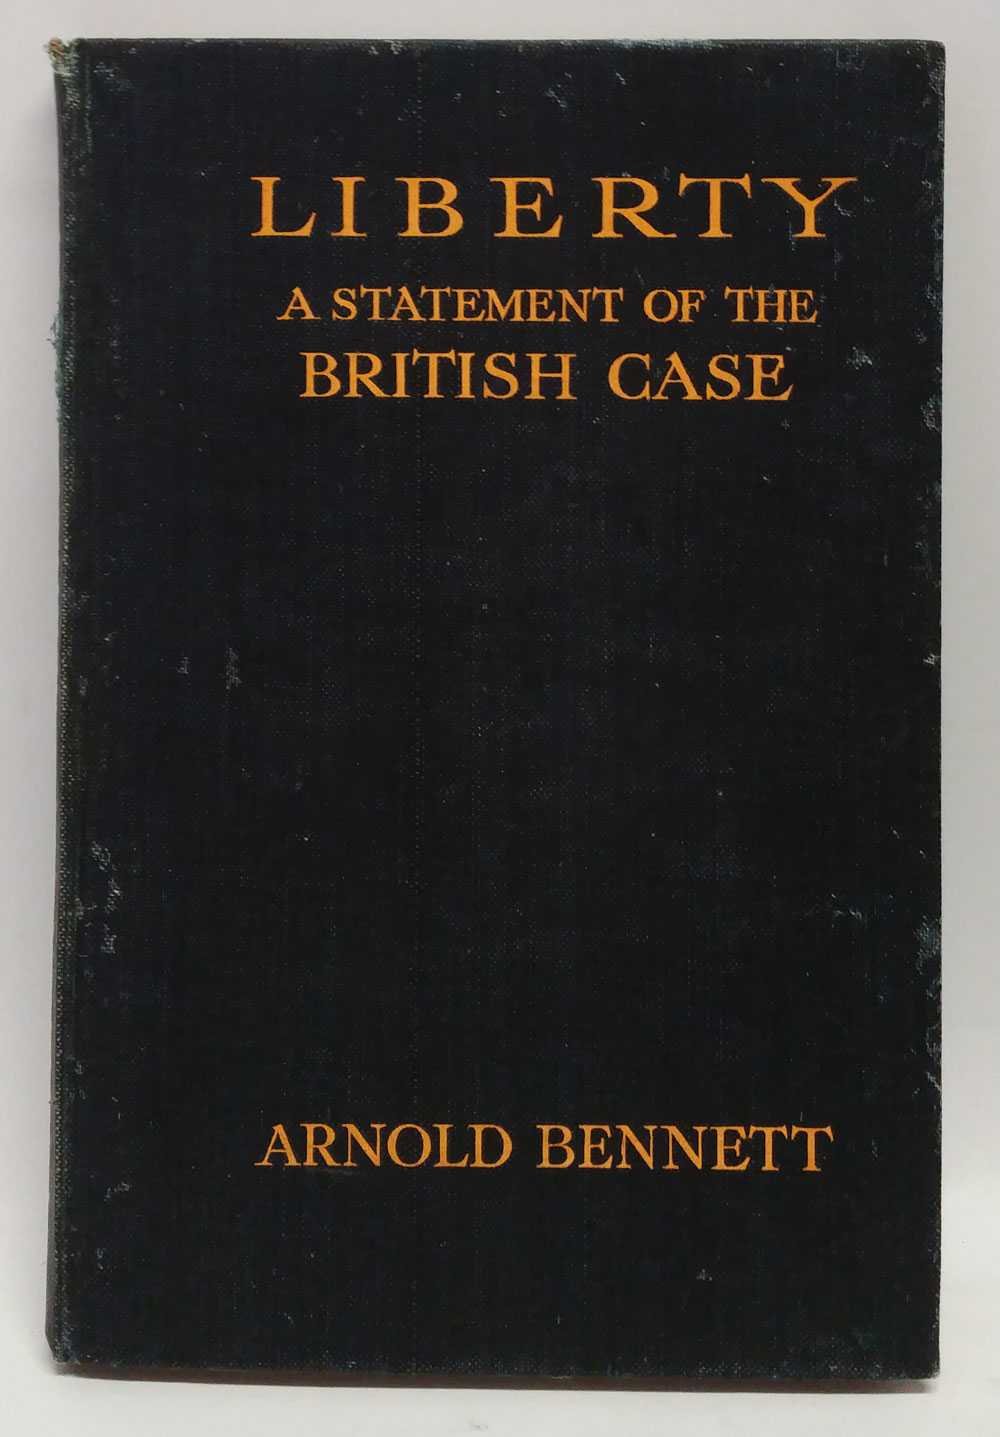 Arnold Bennett - Liberty: A Statement of the British Case